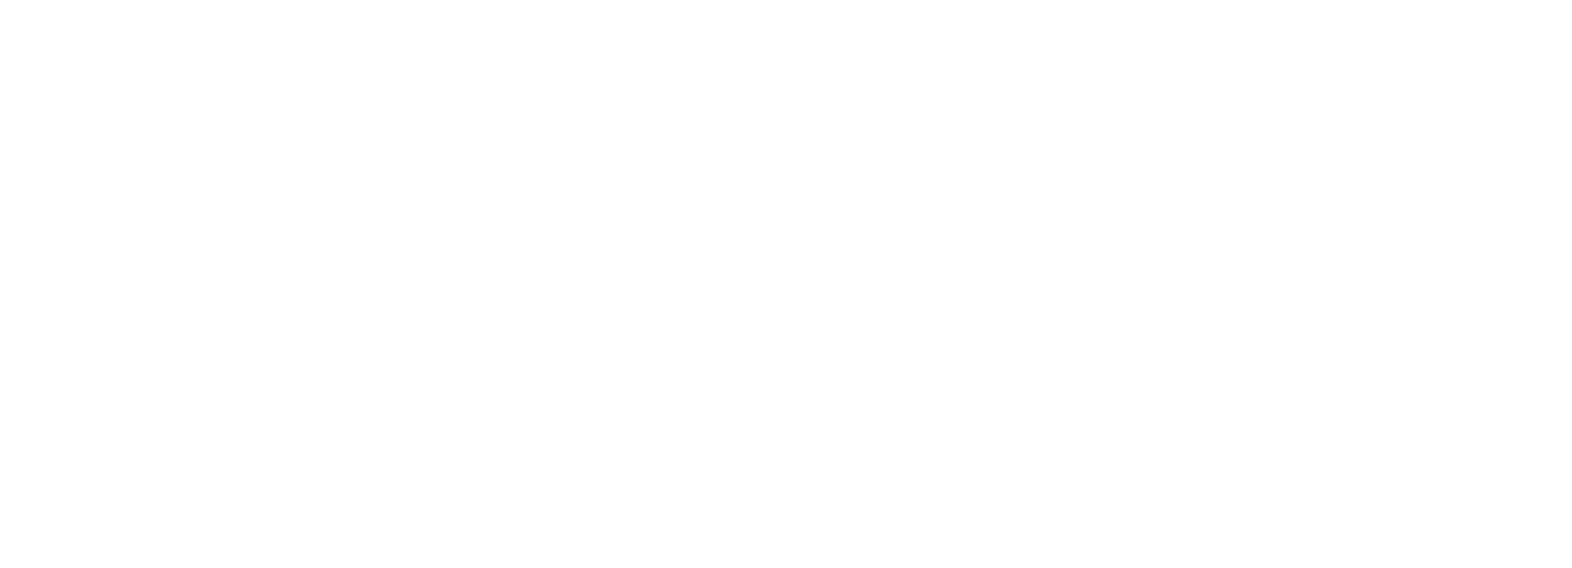 Clearwater Utilities Logo